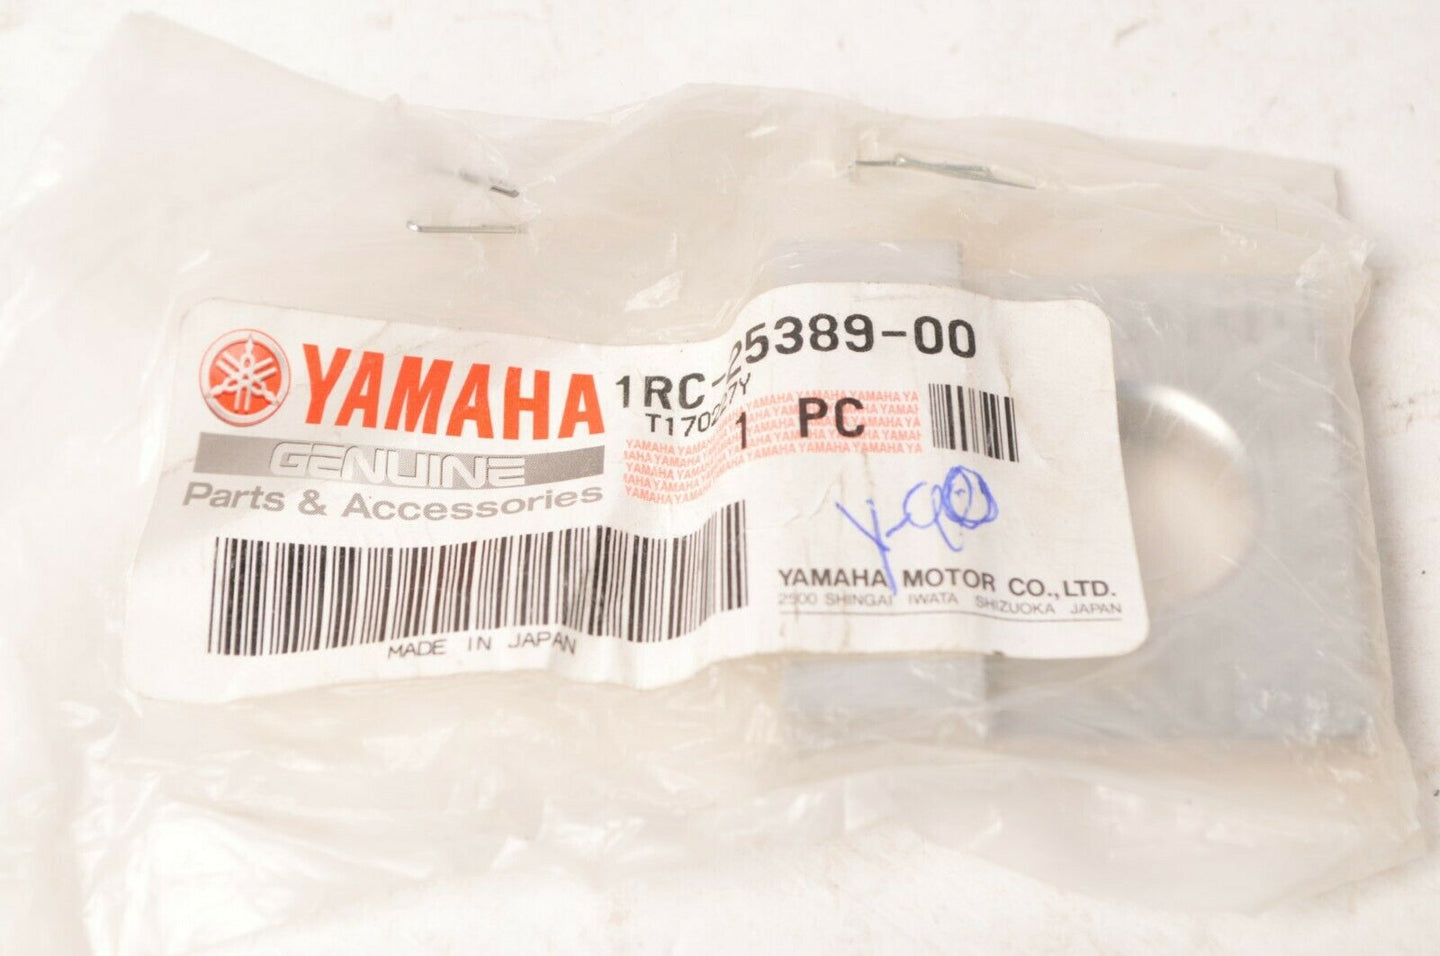 Genuine Yamaha 1RC-25389-00 puller,chain adjuster block LH Left - FZ09 FJ09 MT09